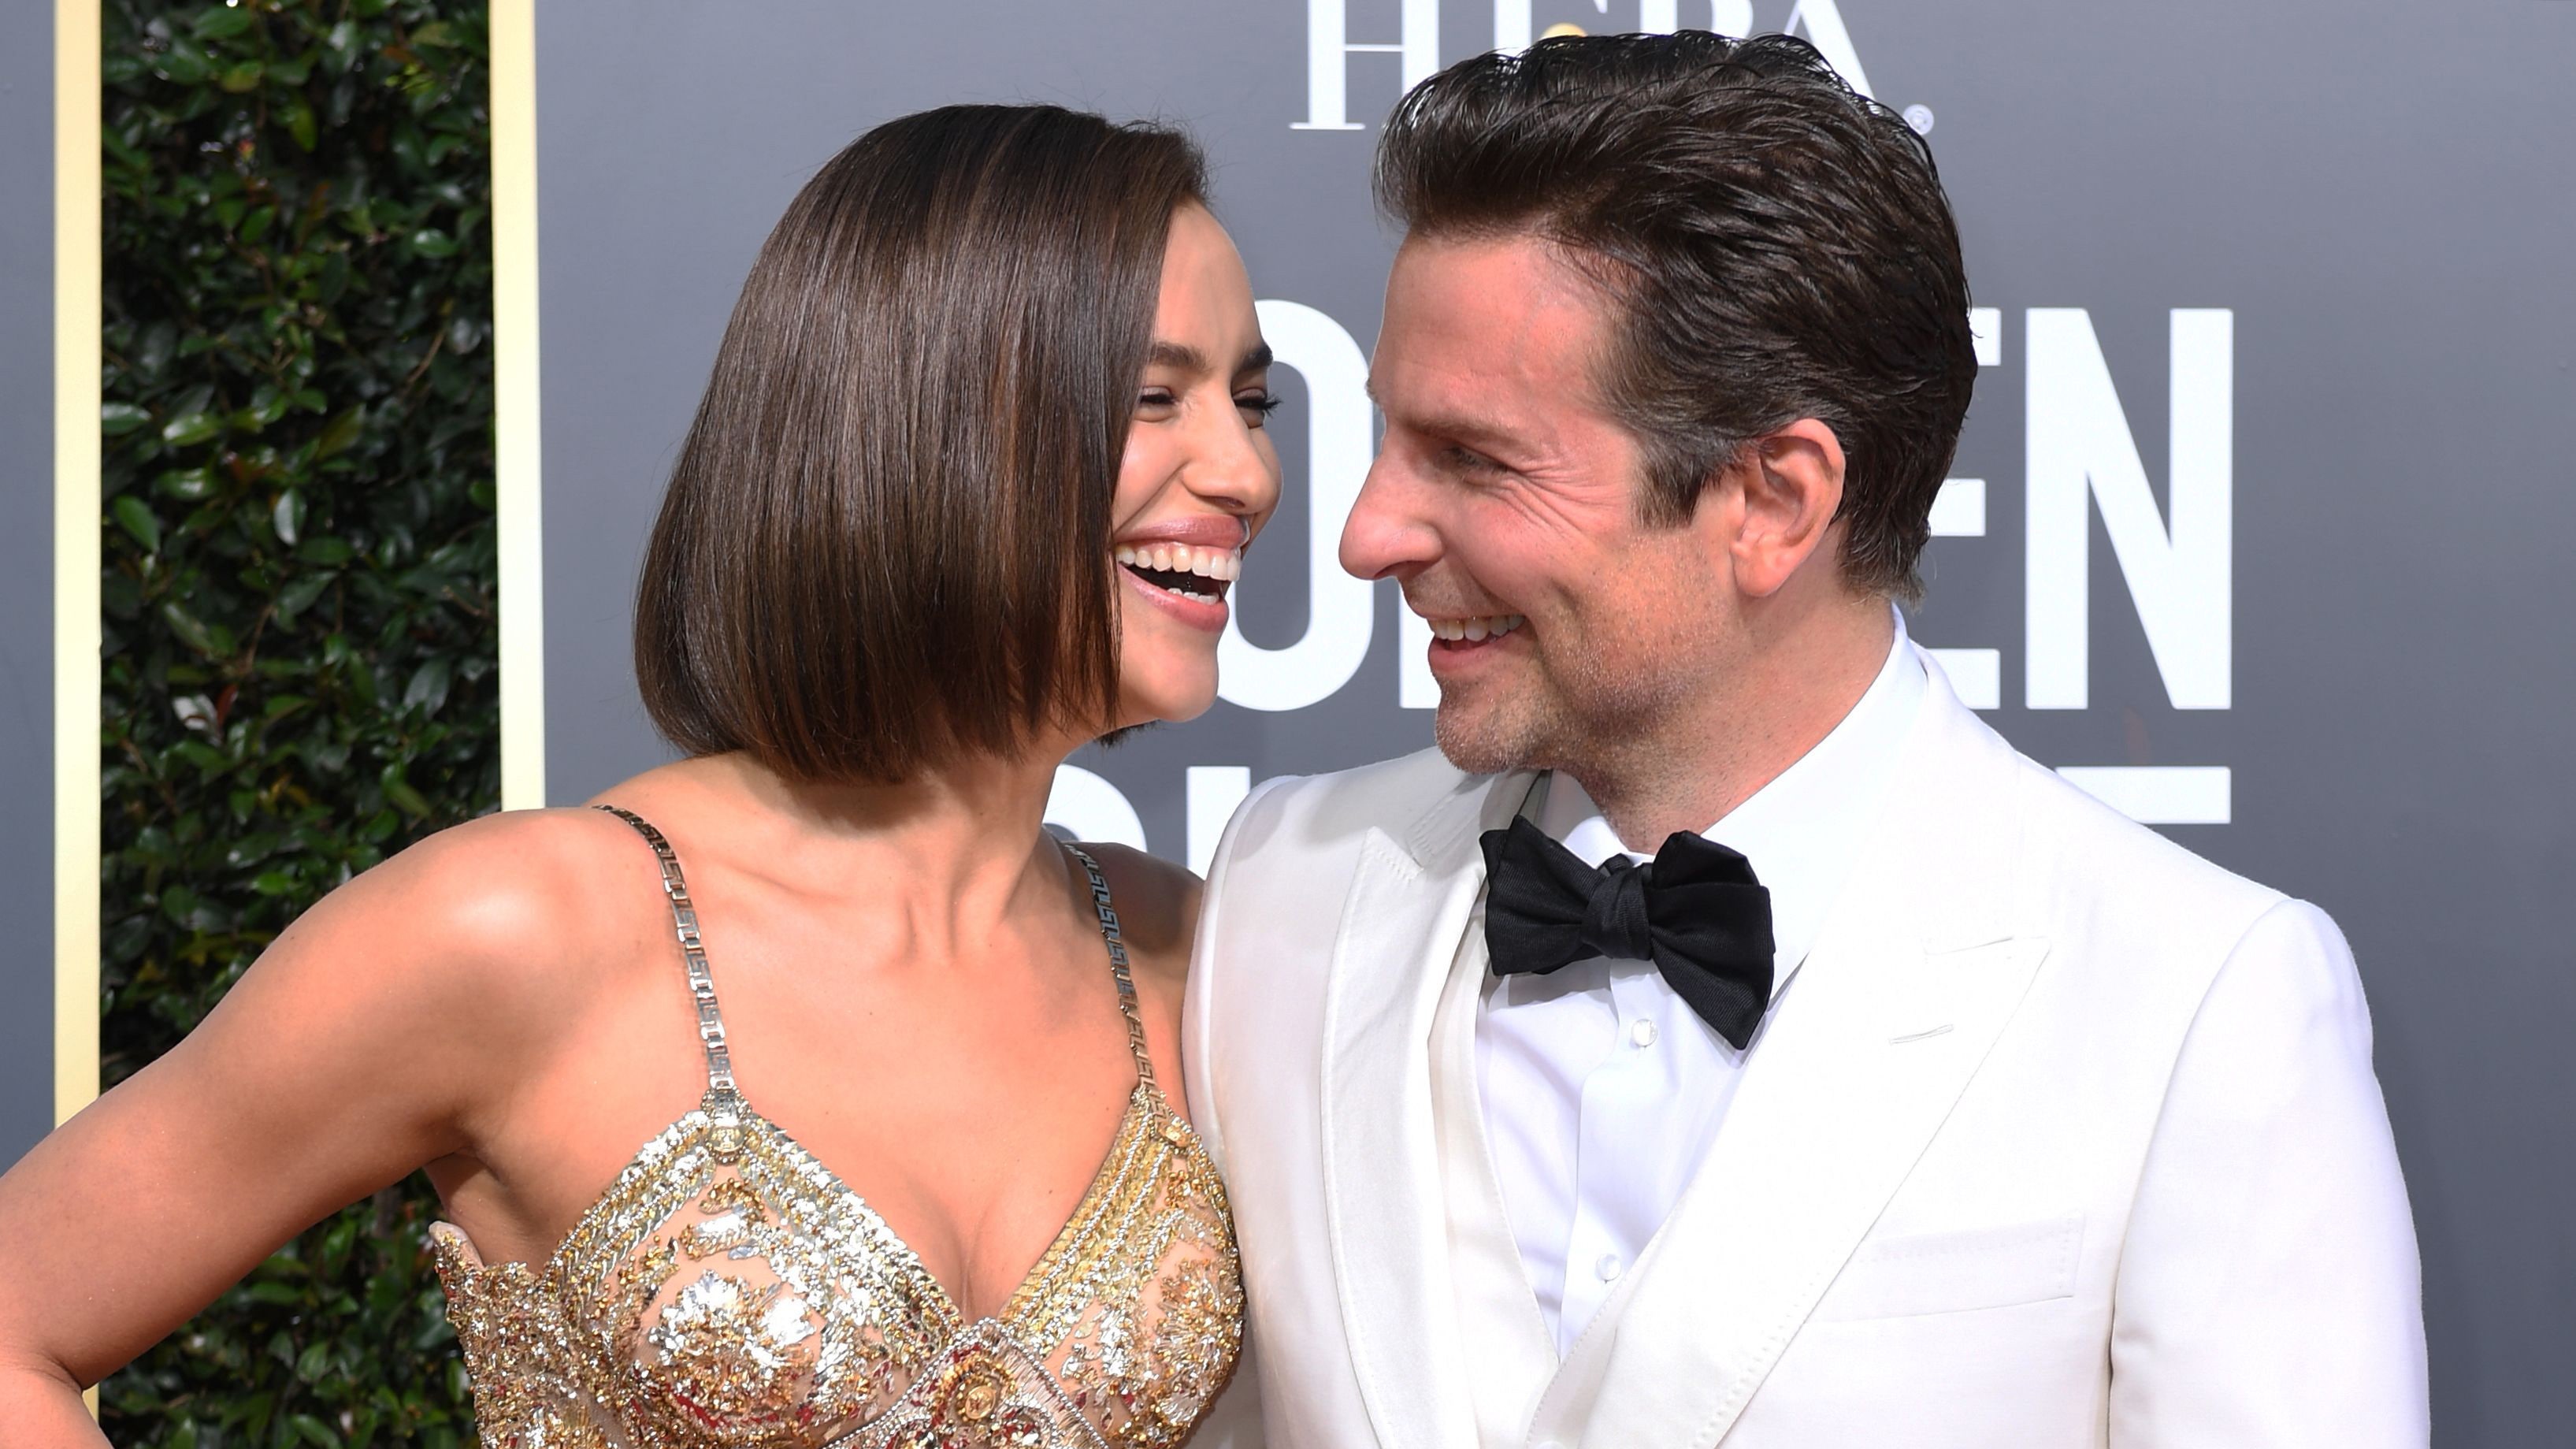 Irina Shayk and Bradley Cooper laugh at the Golden Globes award carpet